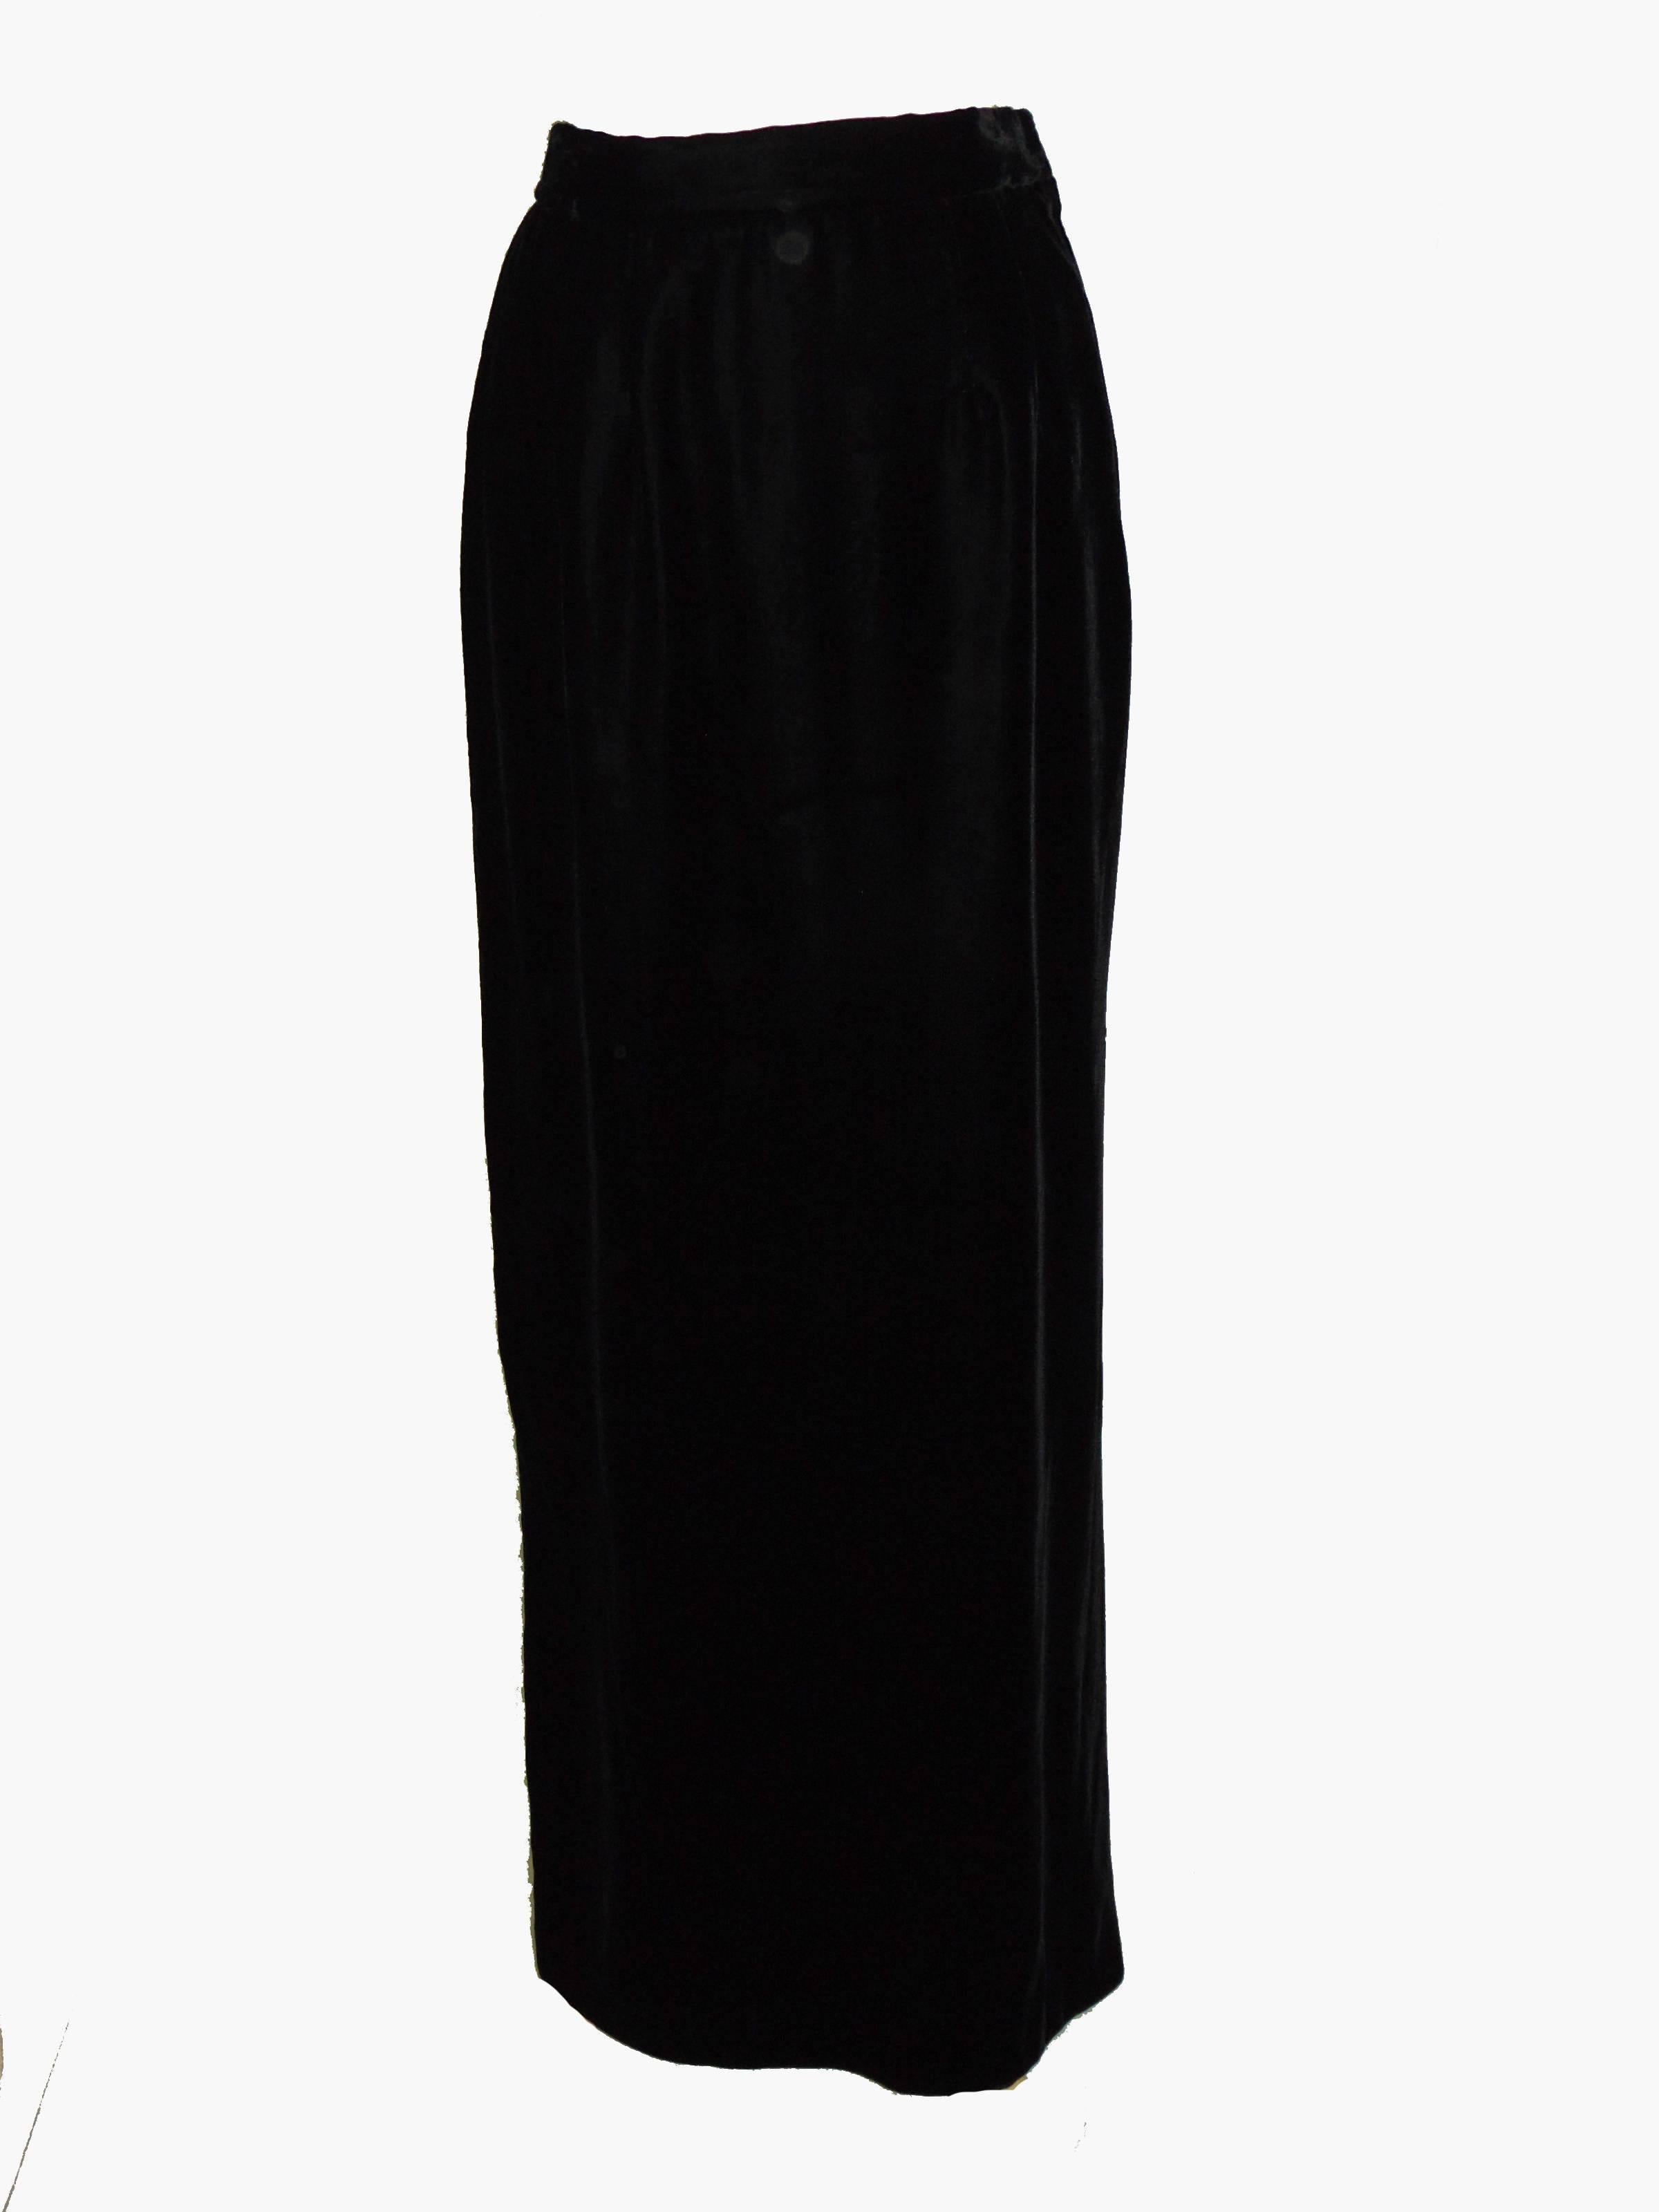 Classic Oscar de la Renta Black Evening Skirt with Side Vent Size 12 1980s  1